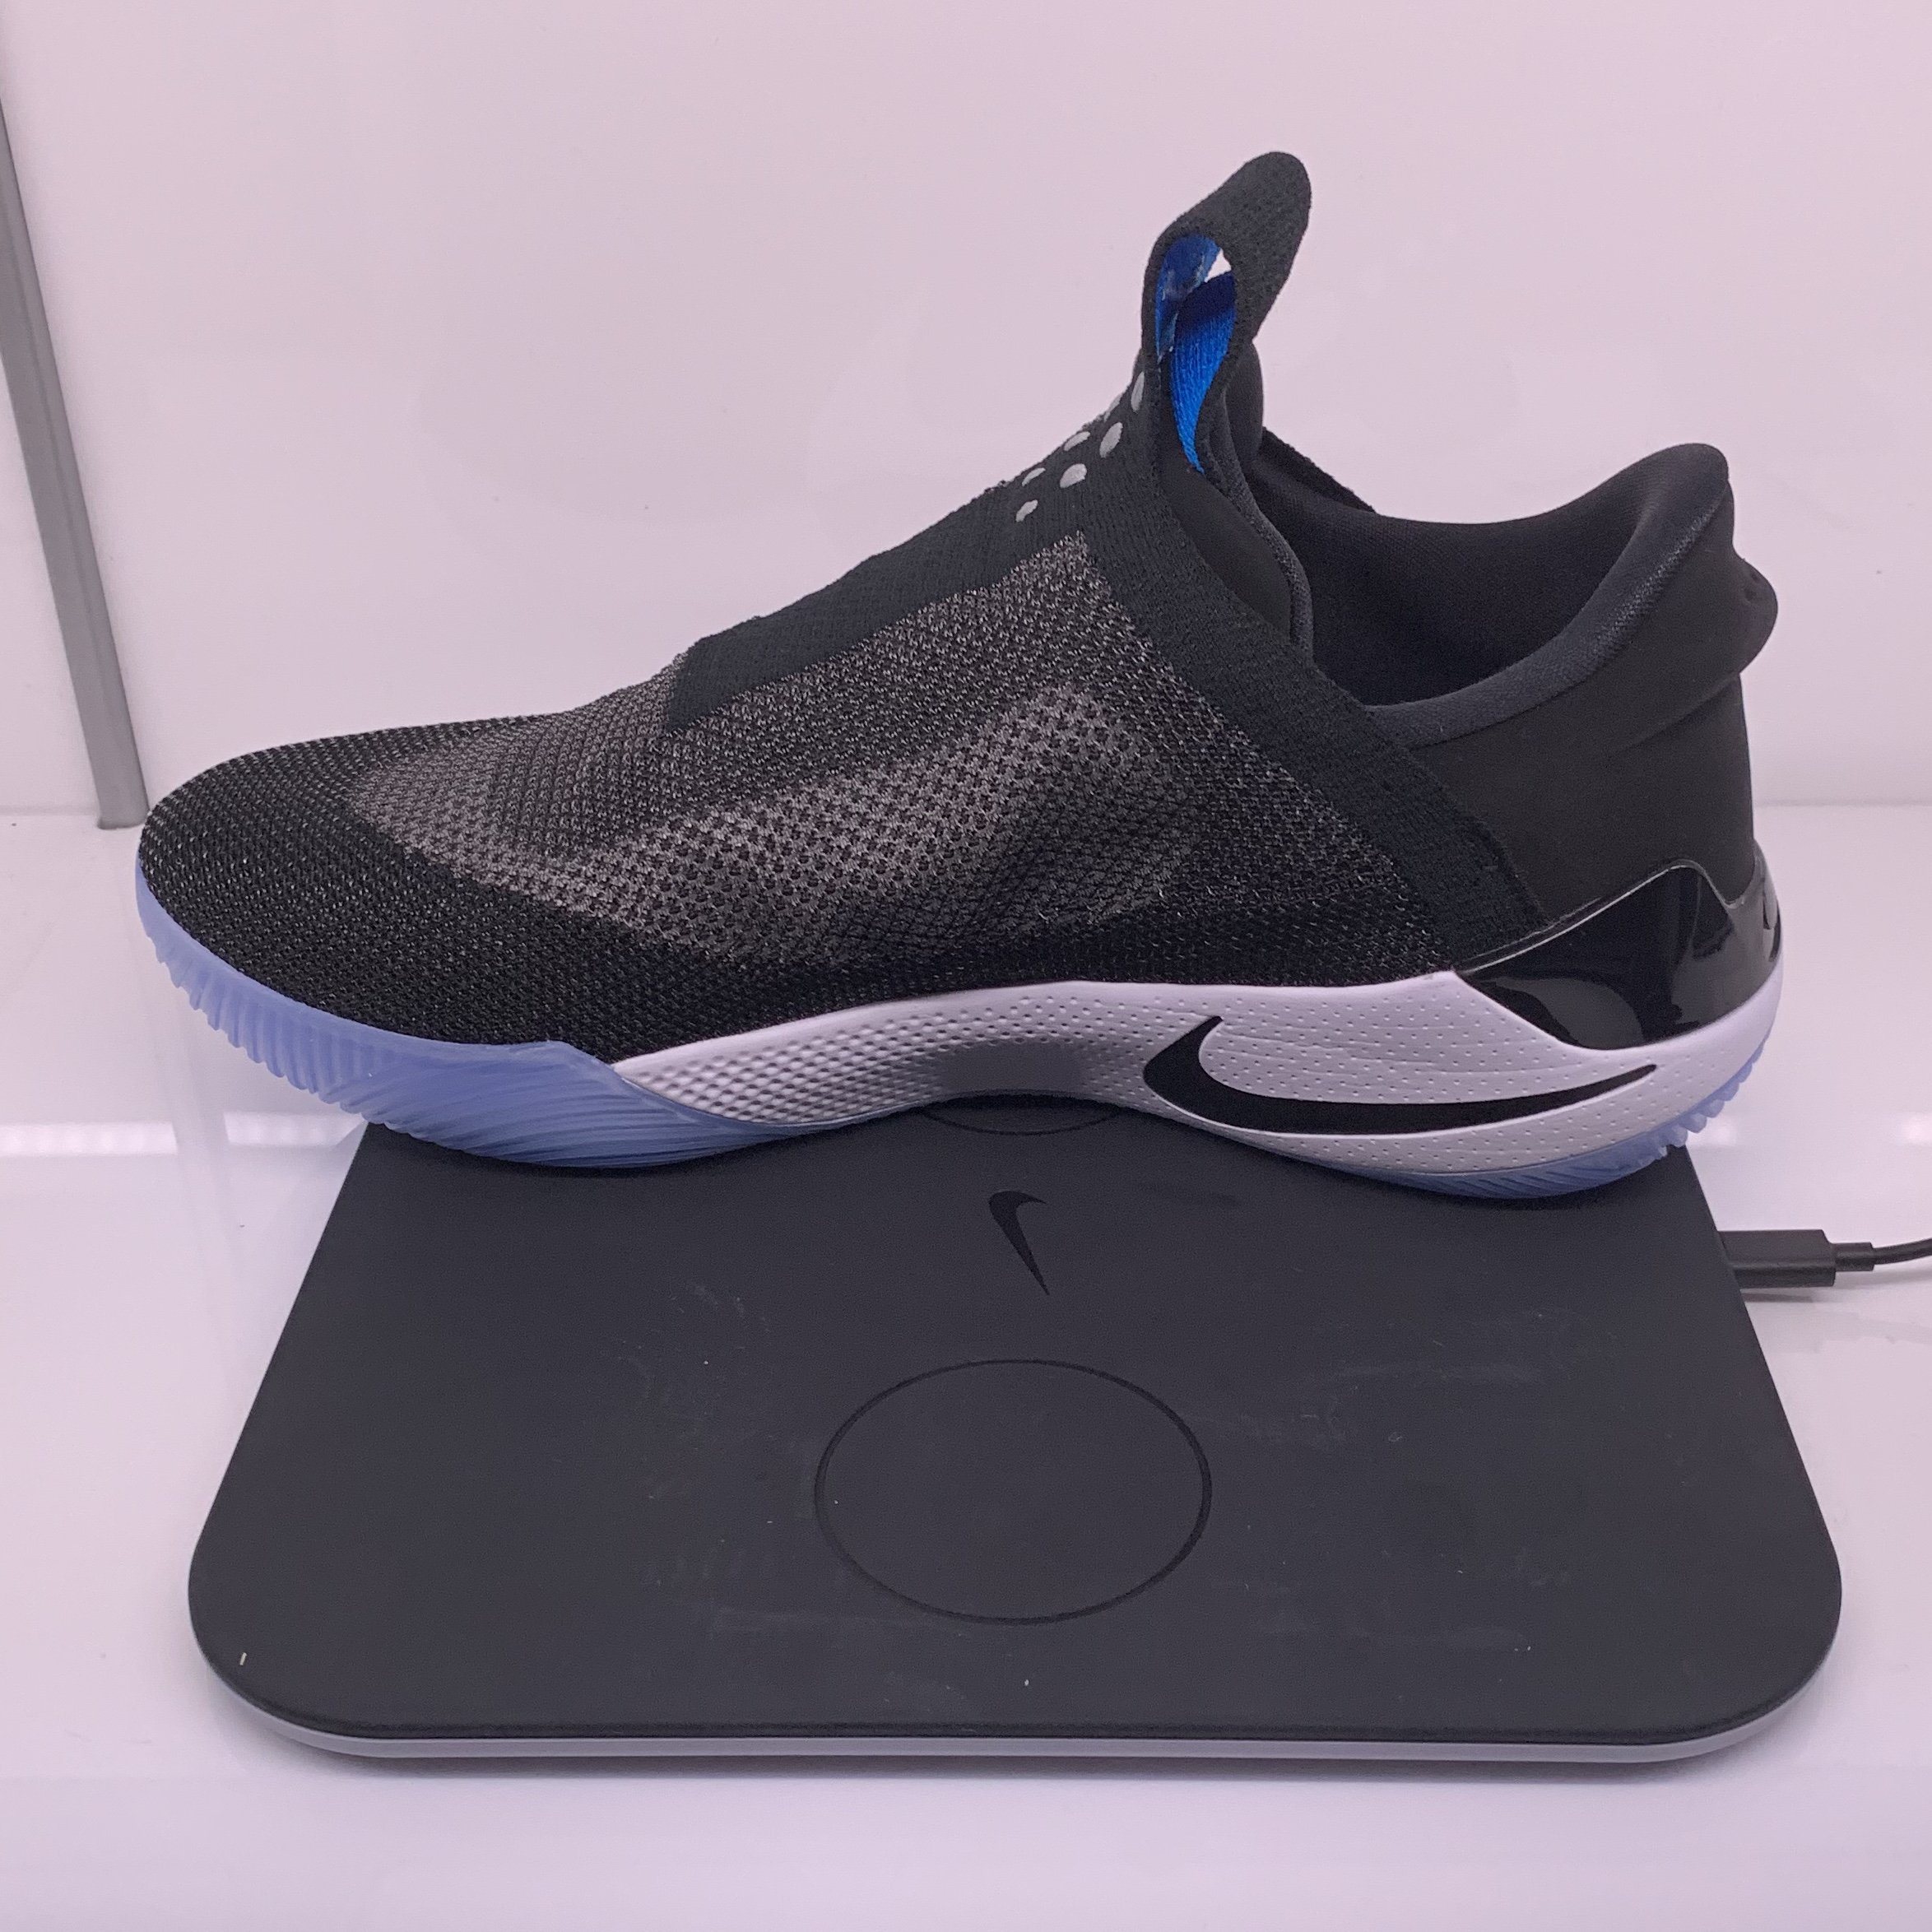 تويتر J23 iPhone App على تويتر: "Each pair of Nike Adapt BB with a wireless charging pad, charge about 2 weeks https://t.co/QdoeJIMgkR"